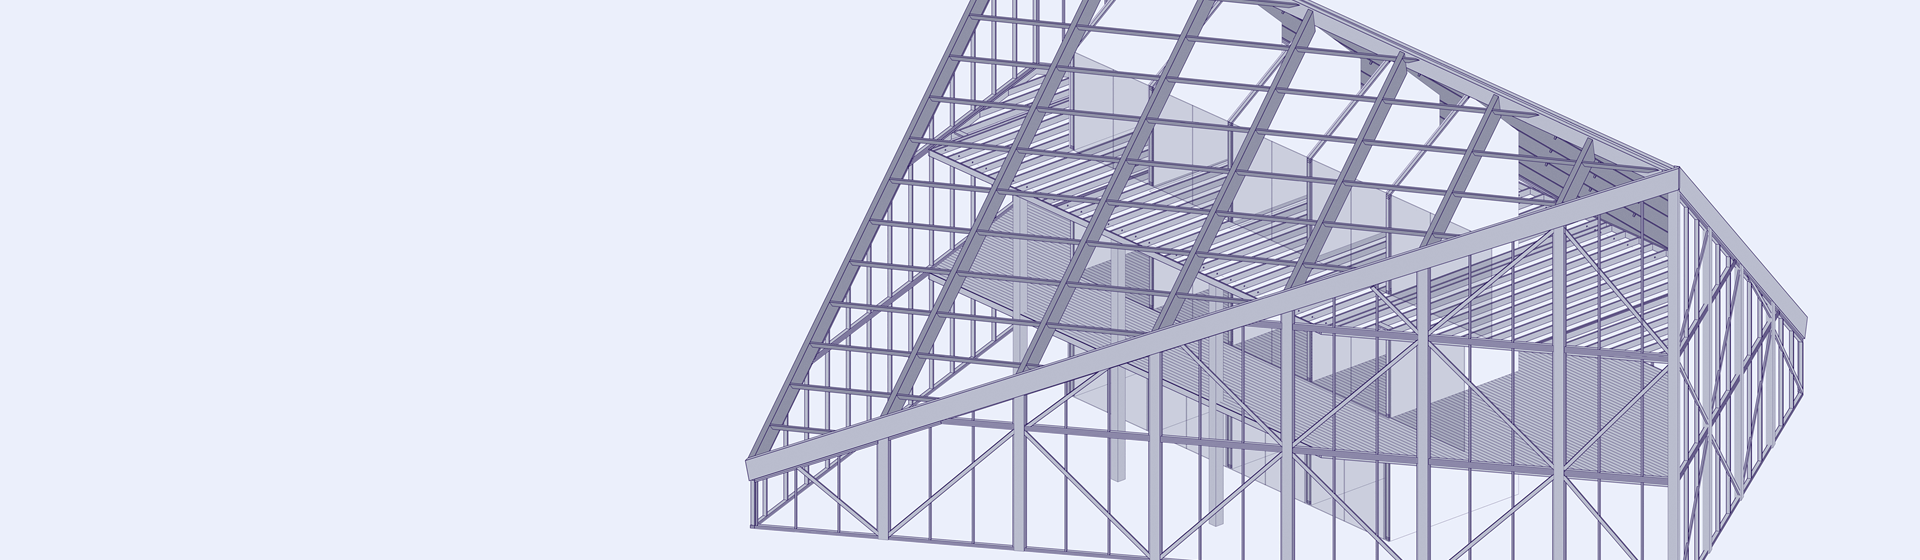 [Webinar] How Agacad Wood Framing improves structural modeling, drafting and data management in Revit®